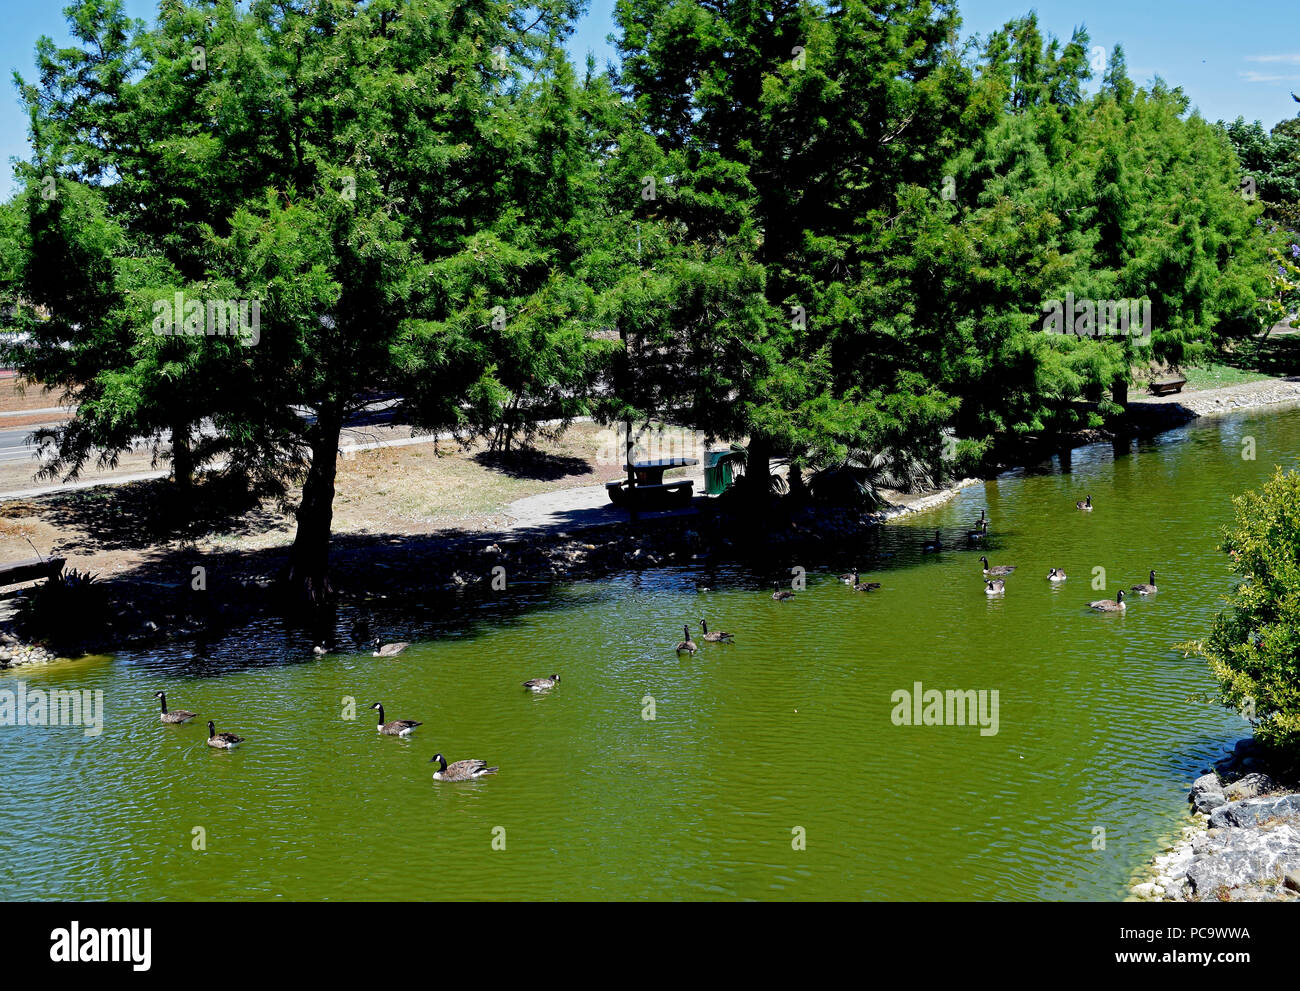 Canada Gänse am Teich in William Cann Civic Center Park, Union City, Kalifornien Stockfoto